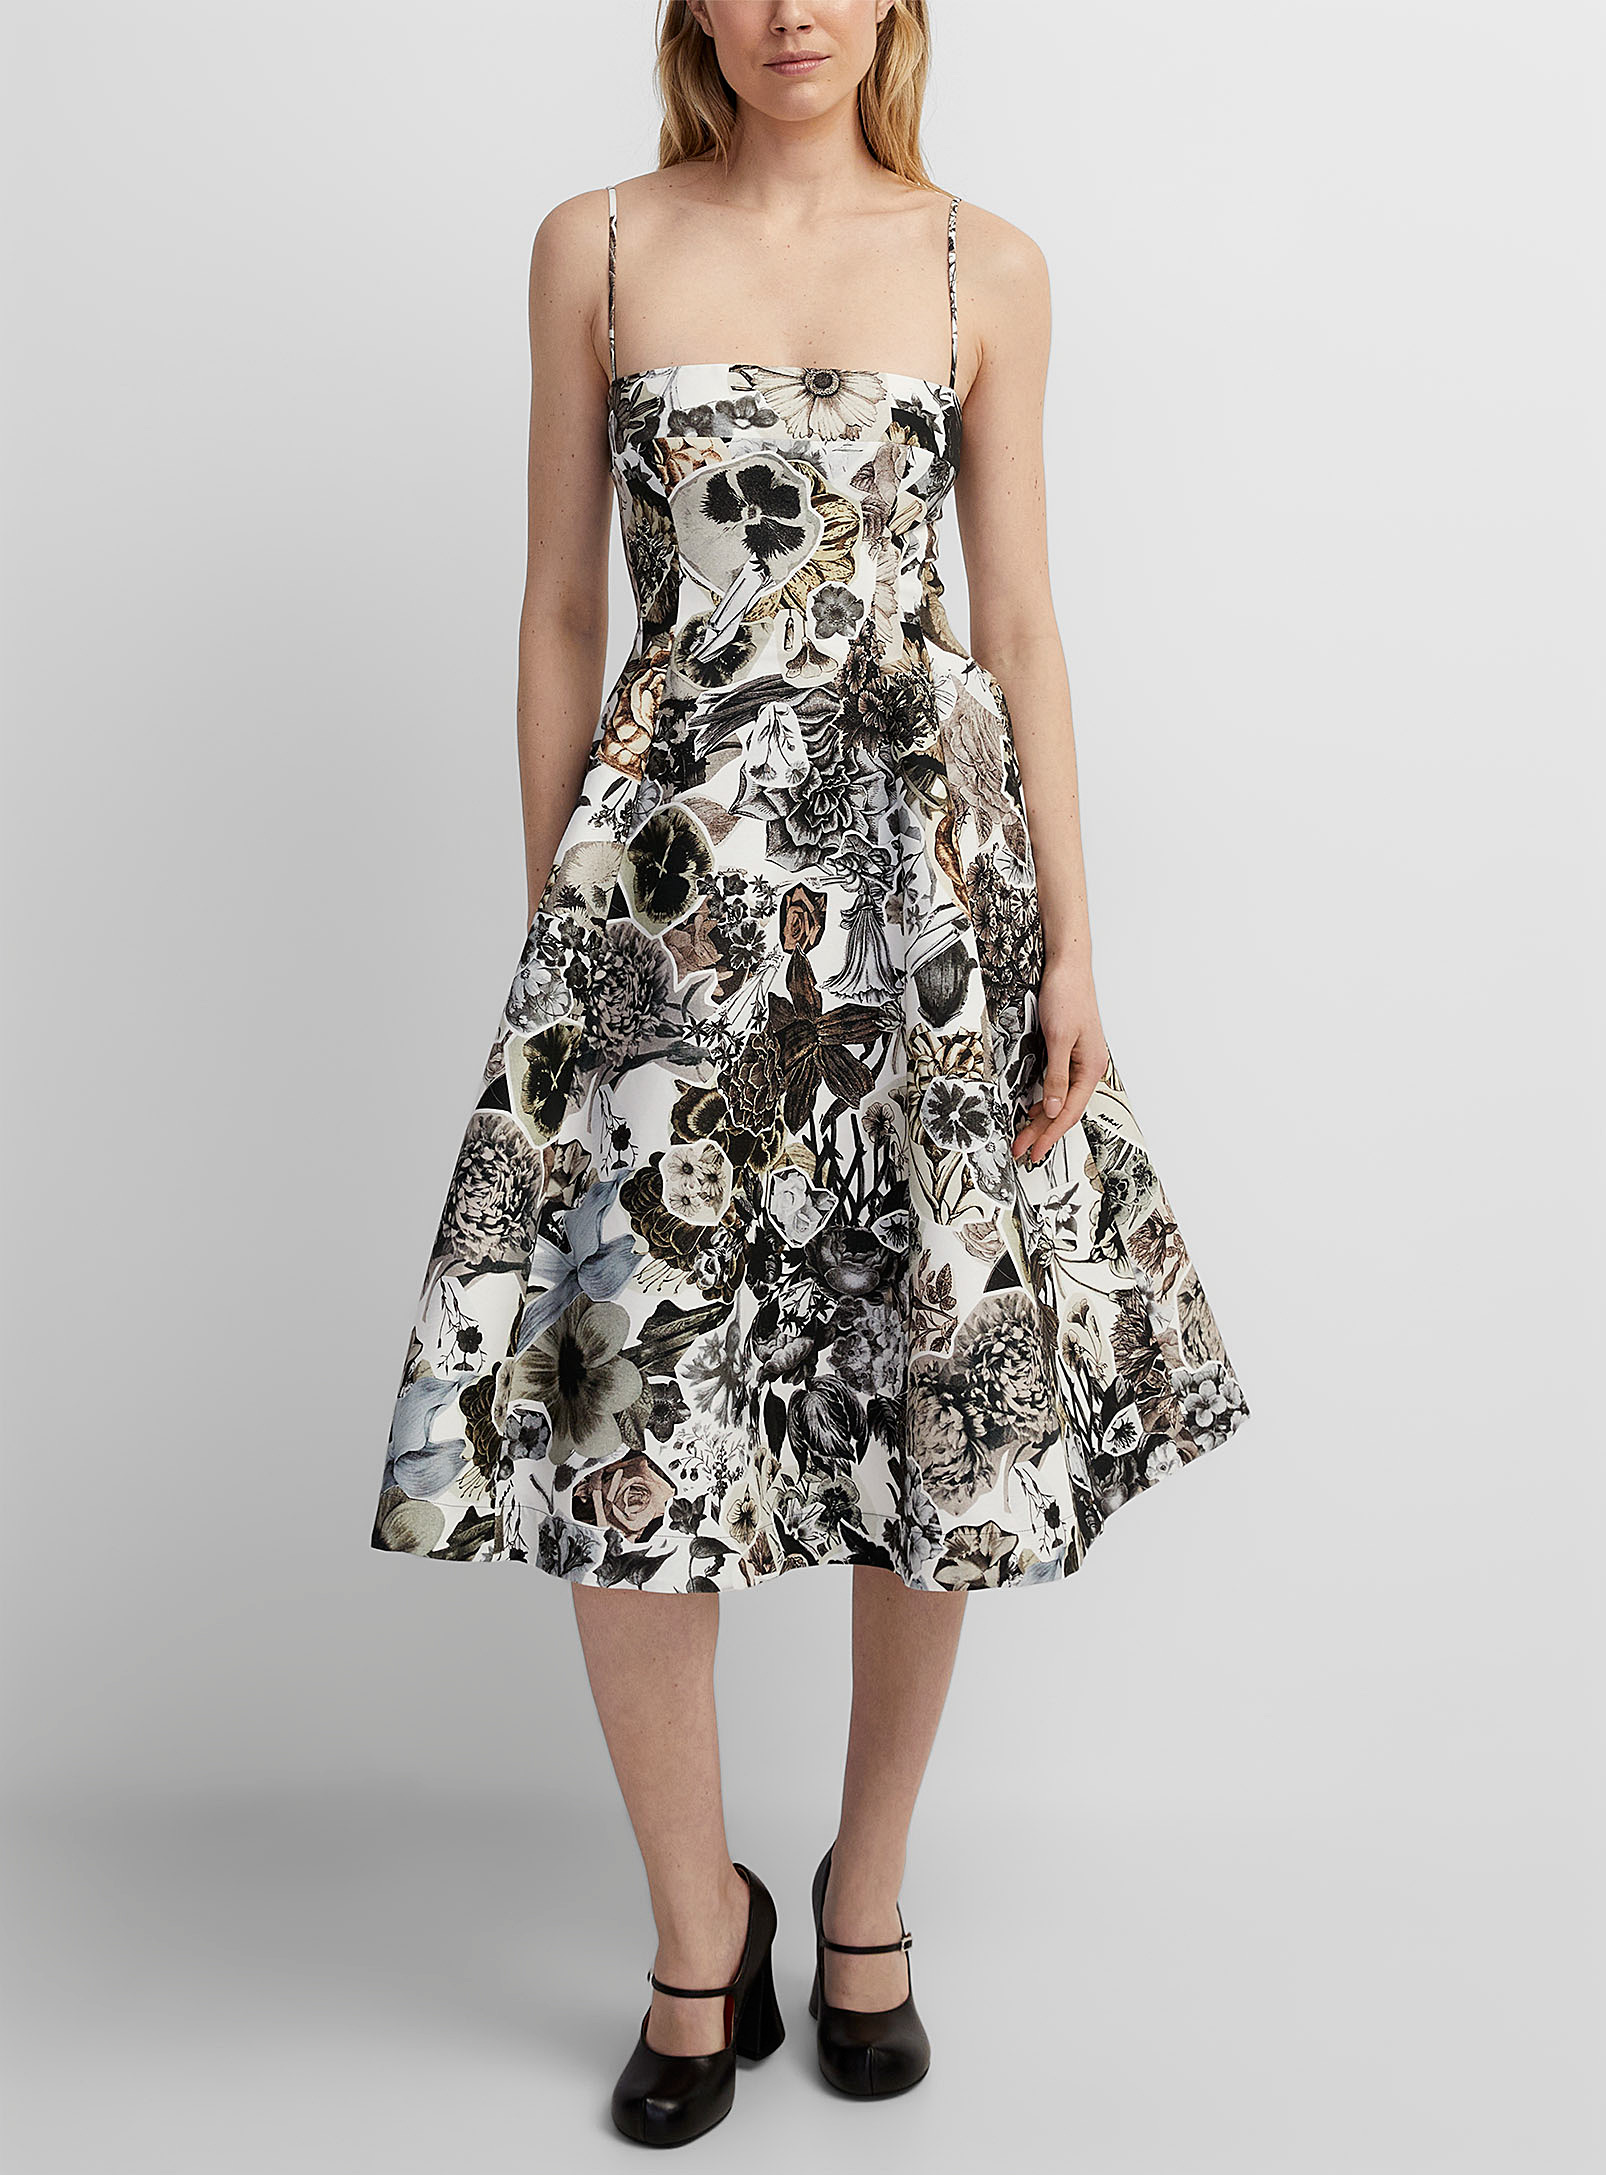 MARNI - La robe évasée tapisserie florale